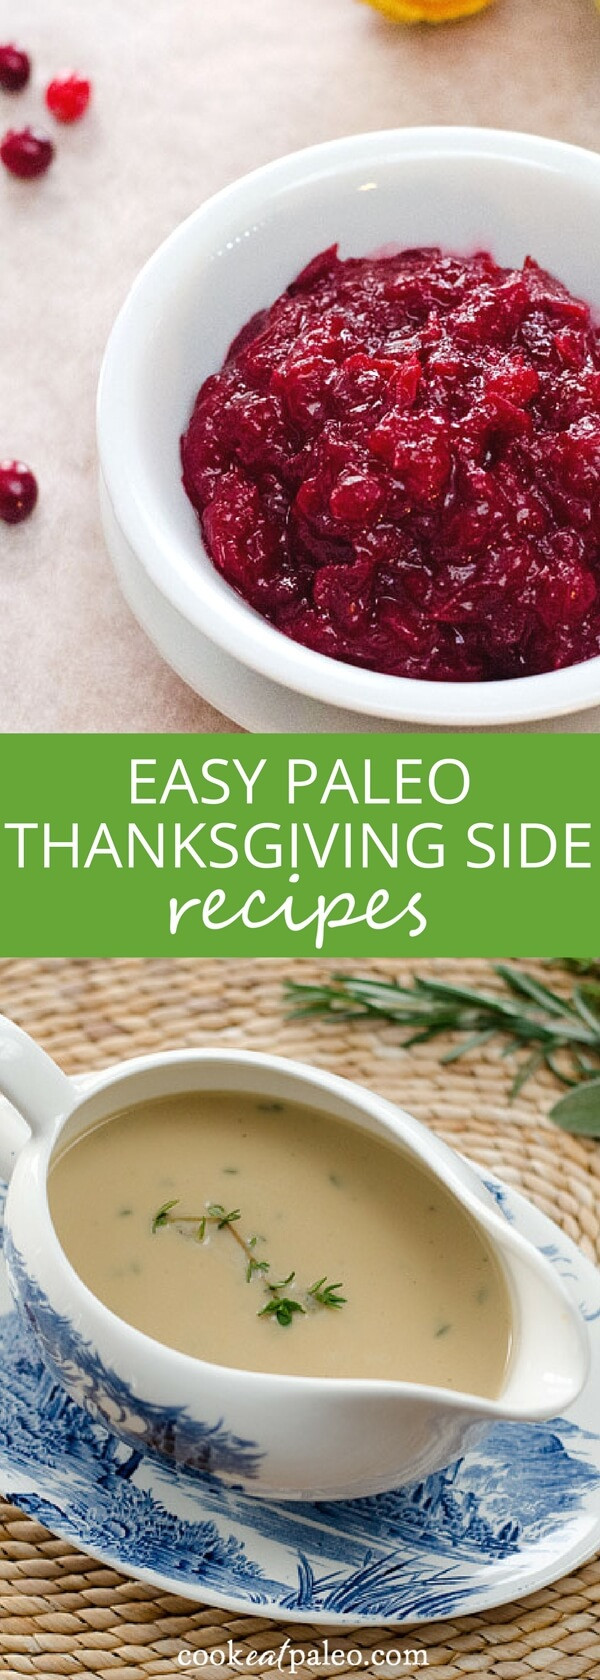 Paleo Thanksgiving Menu
 15 Easy Paleo Thanksgiving Sides